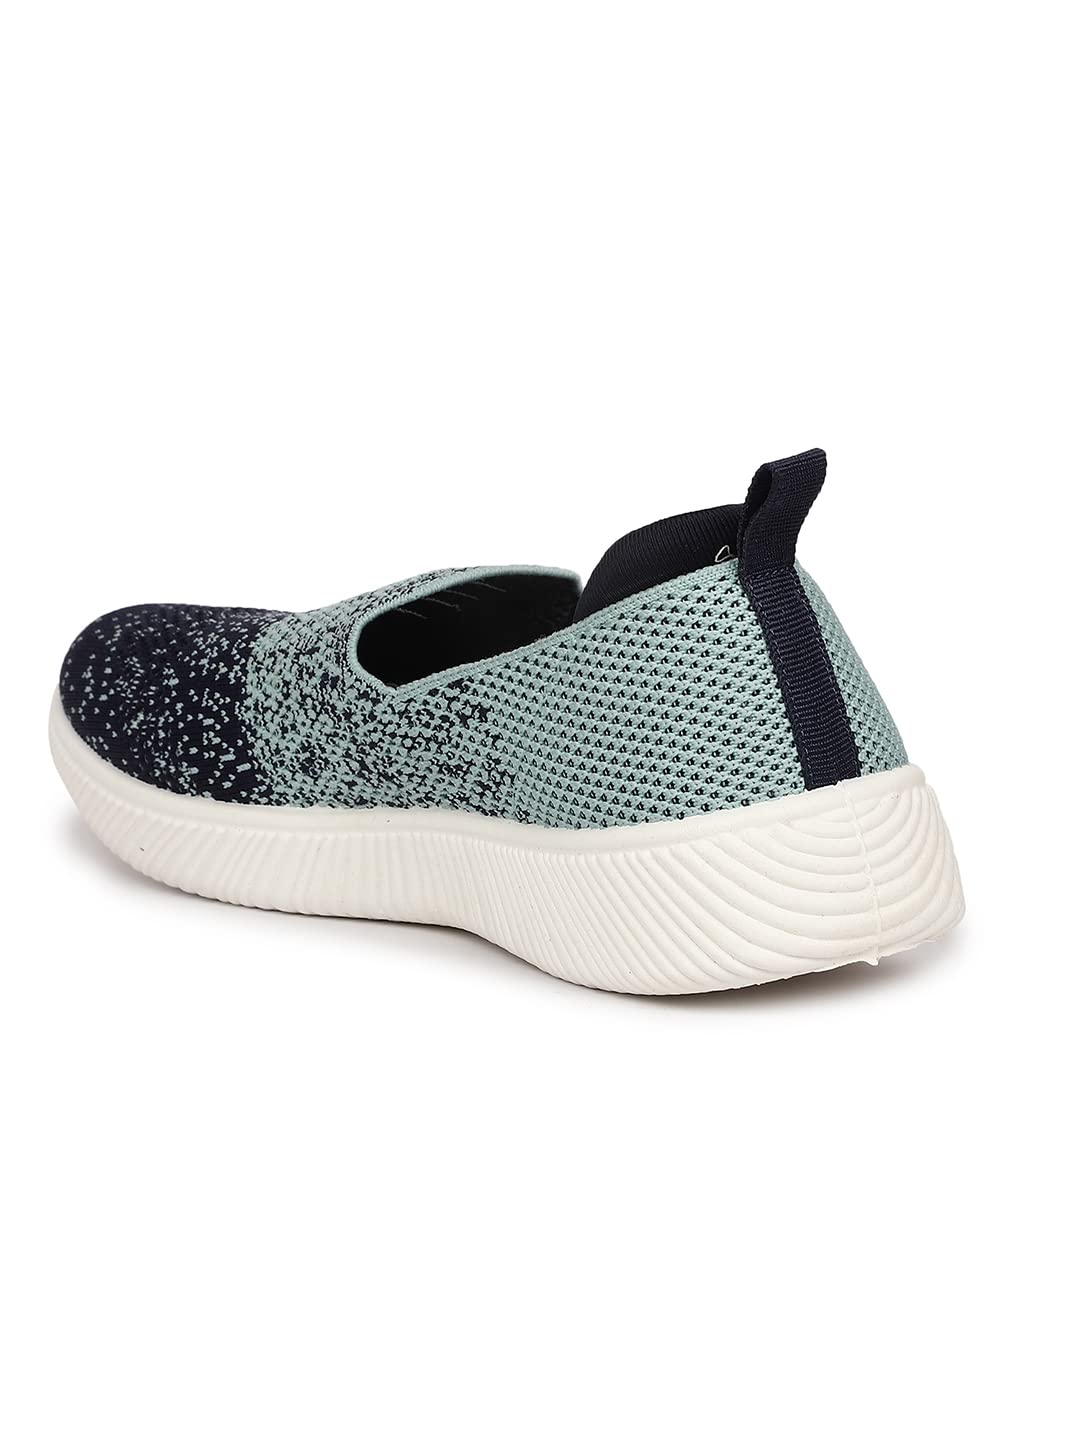 Bata Women Aster Casual Shoes, Navy Blue, (5599852), UK 7 